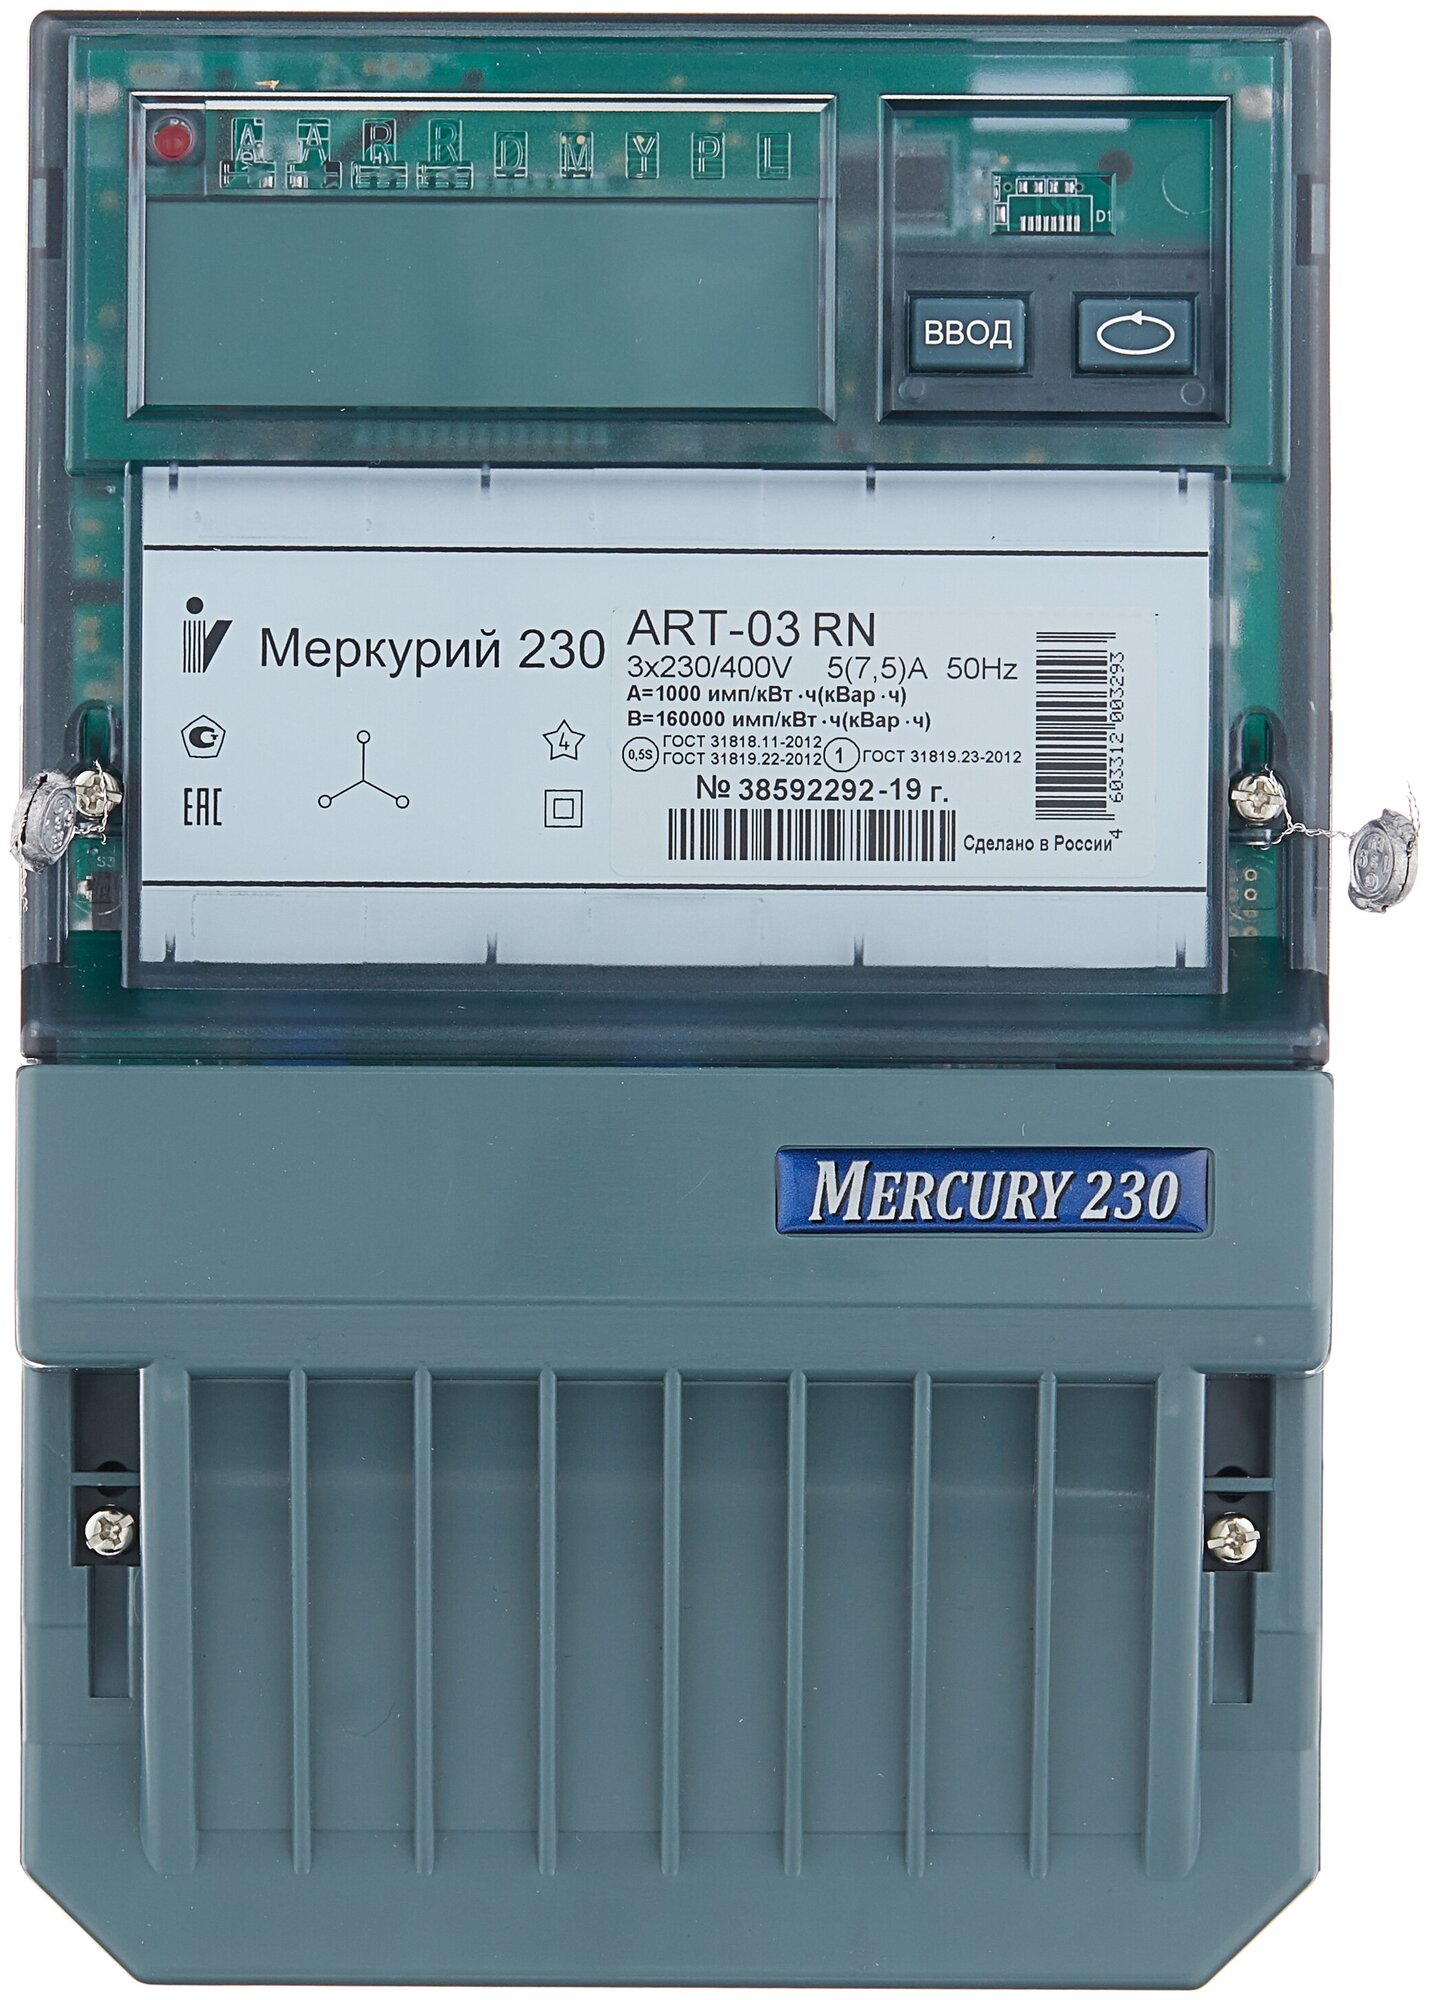 Счетчик "Меркурий" 230 ART-03 RN 3ф 5-7.5А 0.5s/1.0 класс точн. многотариф.; RS485 ЖКИ Моск. вр. Инкотекс М0000052413 (1 шт.)